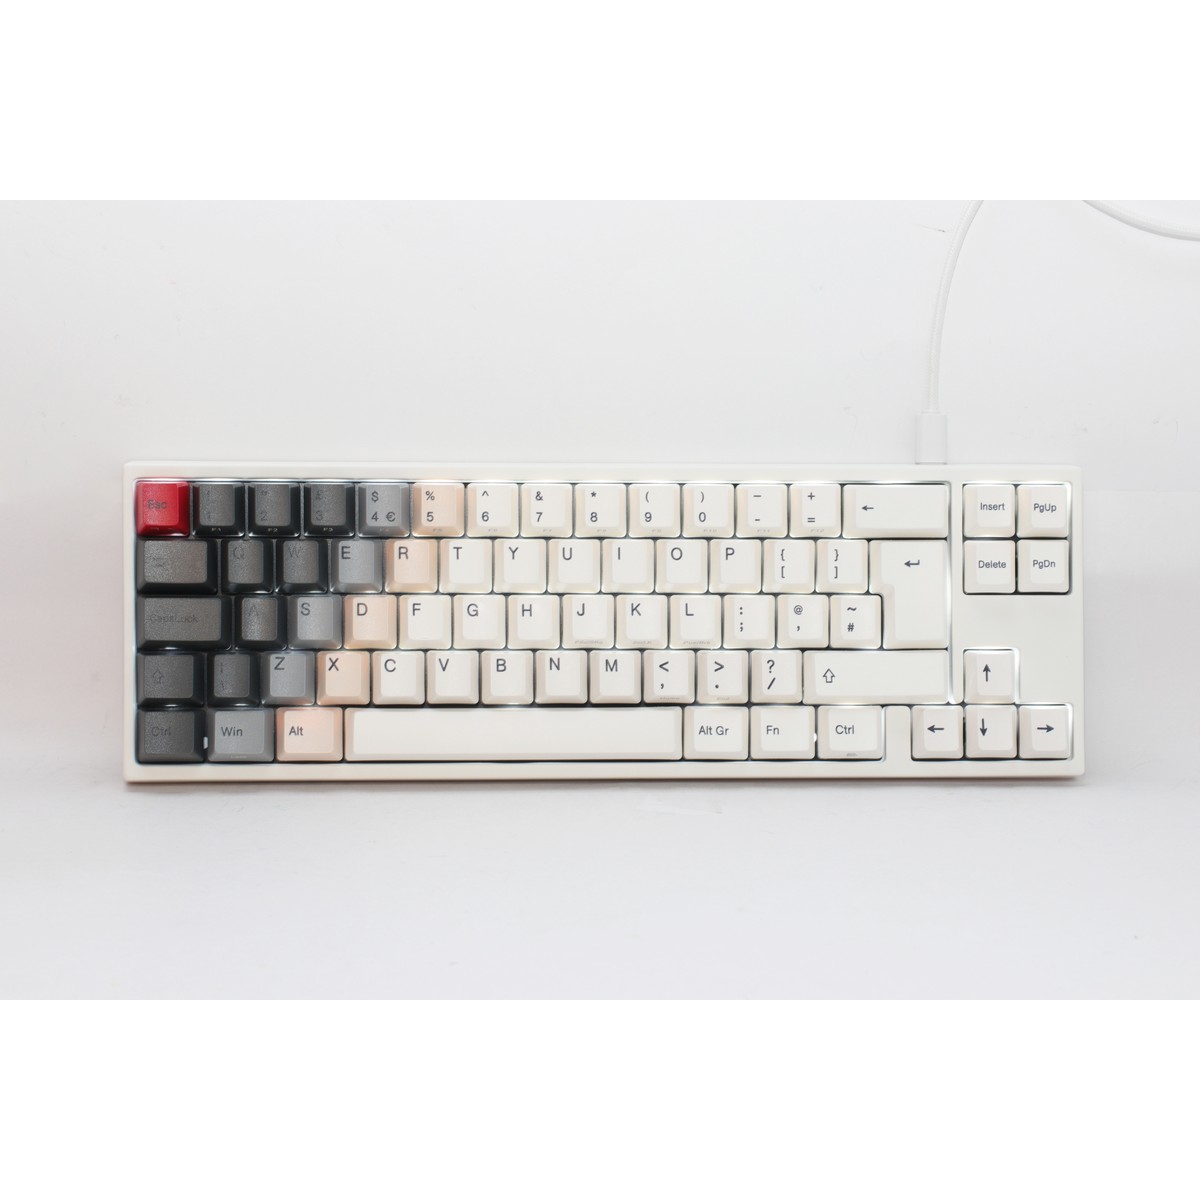 Ducky x Varmilo MIYA 69 Pro Holy Flame Mechanical Gaming Keyboard Cherry MX Blue White Backlit - White/Grey/Red